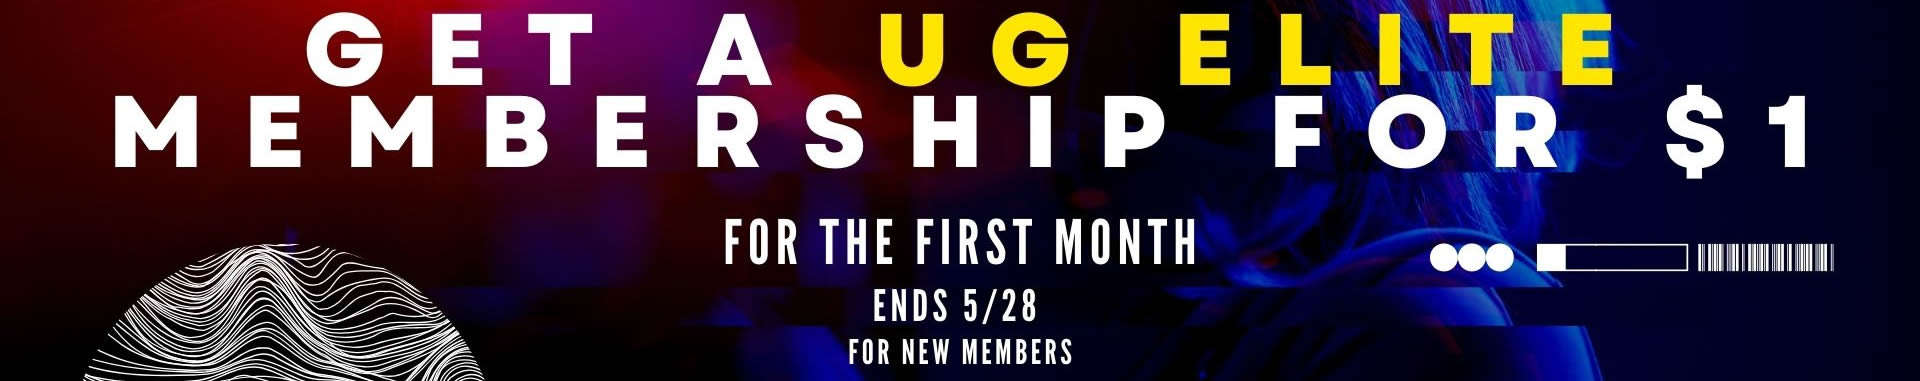 UG Elite Membership - $1 For First Month